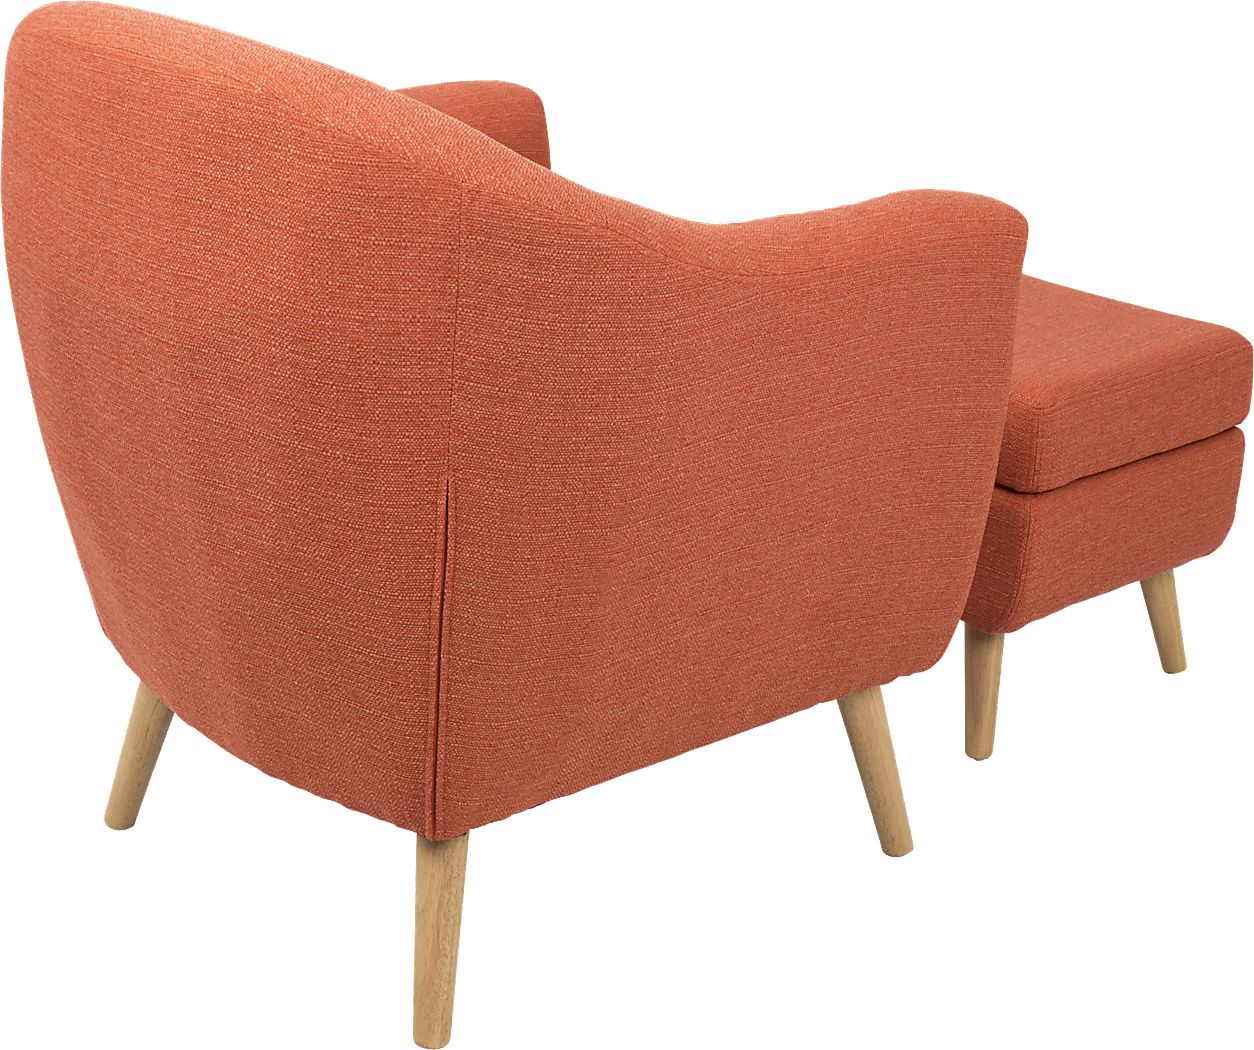 Rozelle Orange Accent Chair & Ottoman